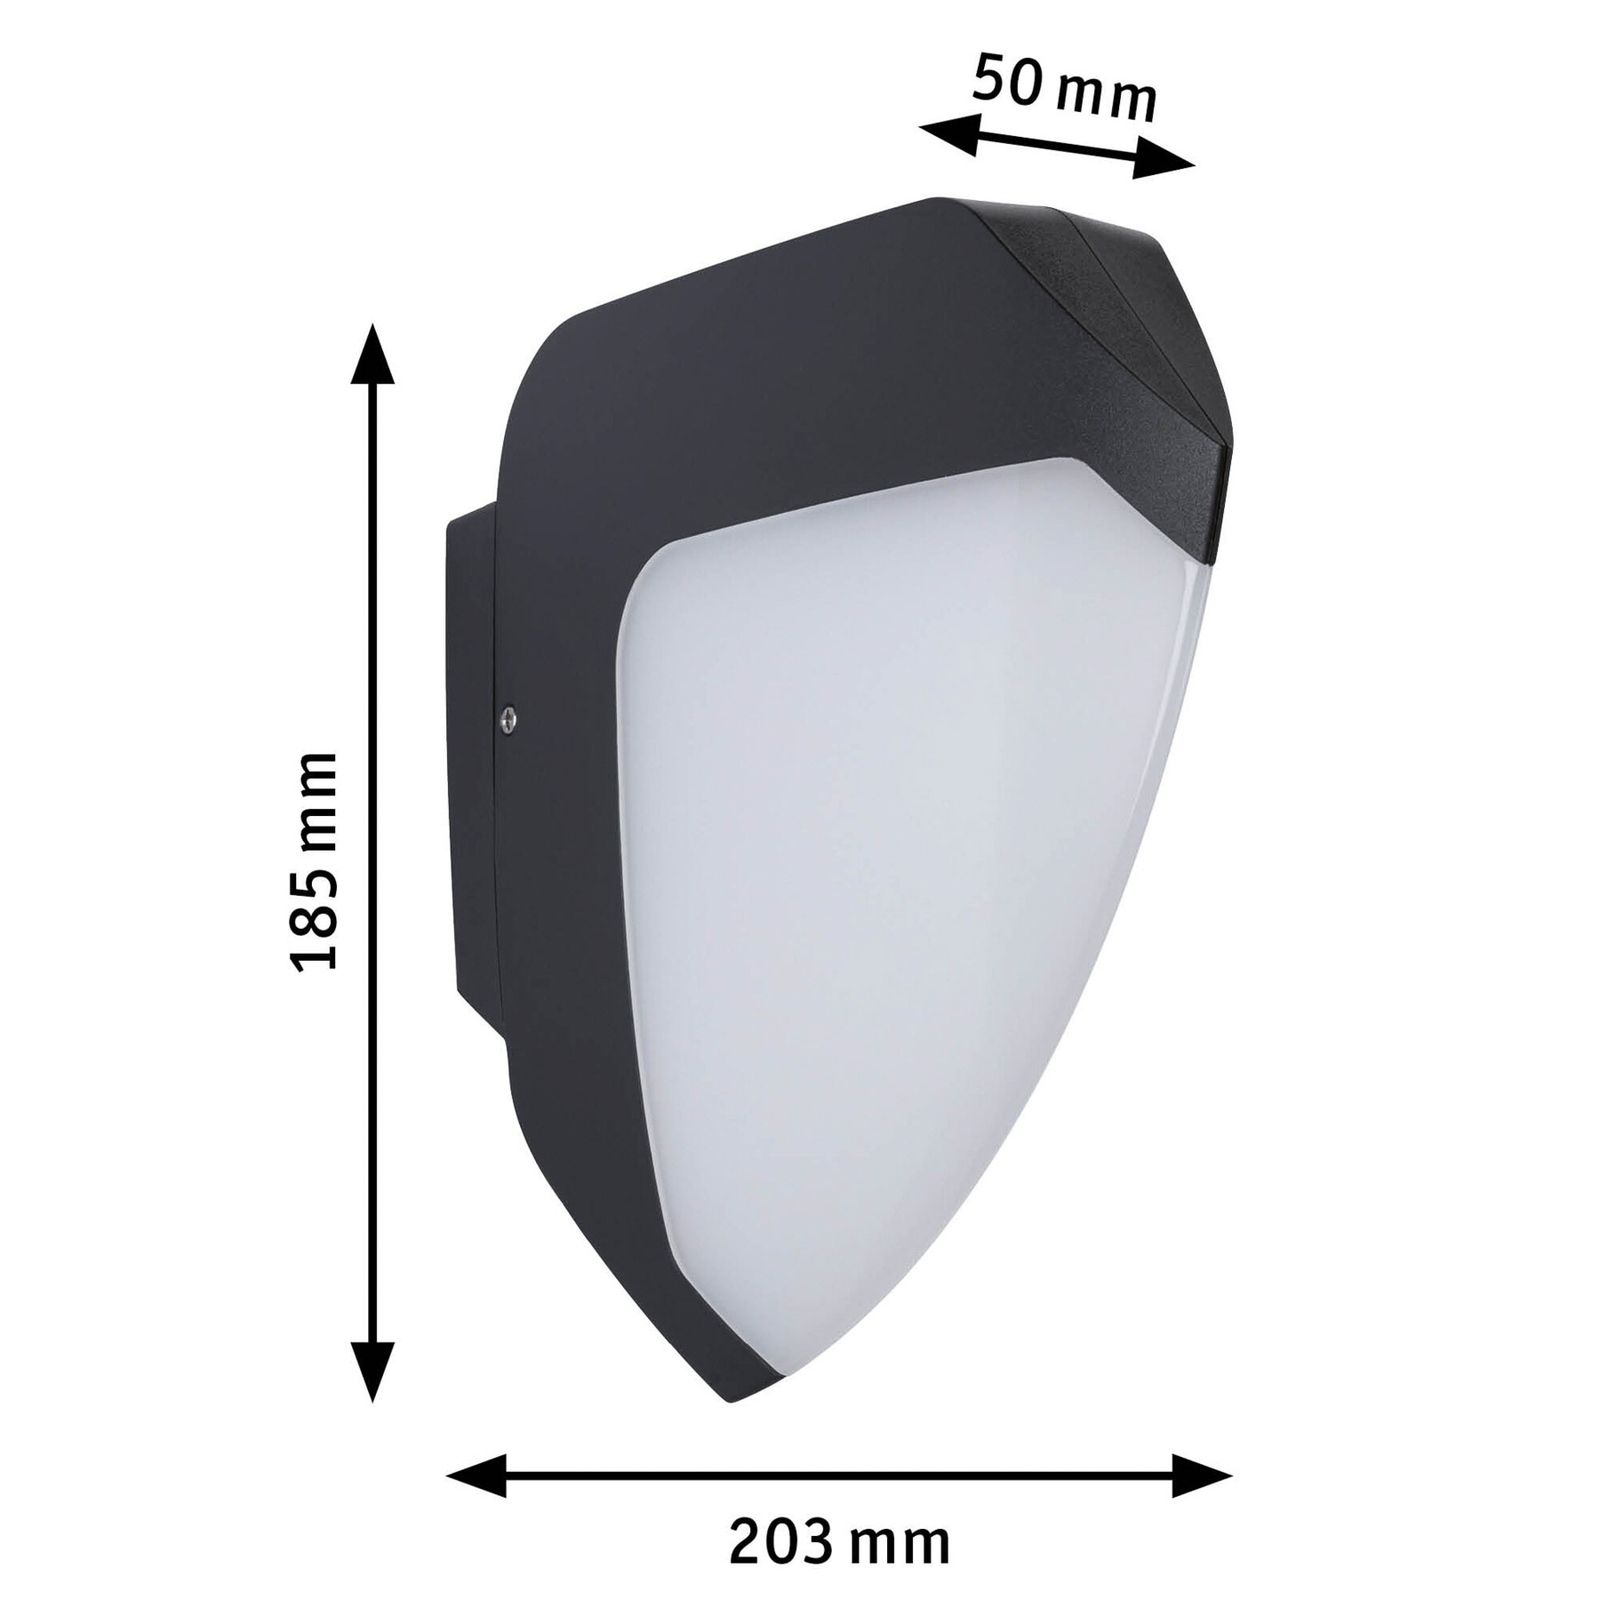 Paulmann Ikosea LED outdoor wall light, ZigBee 3.0